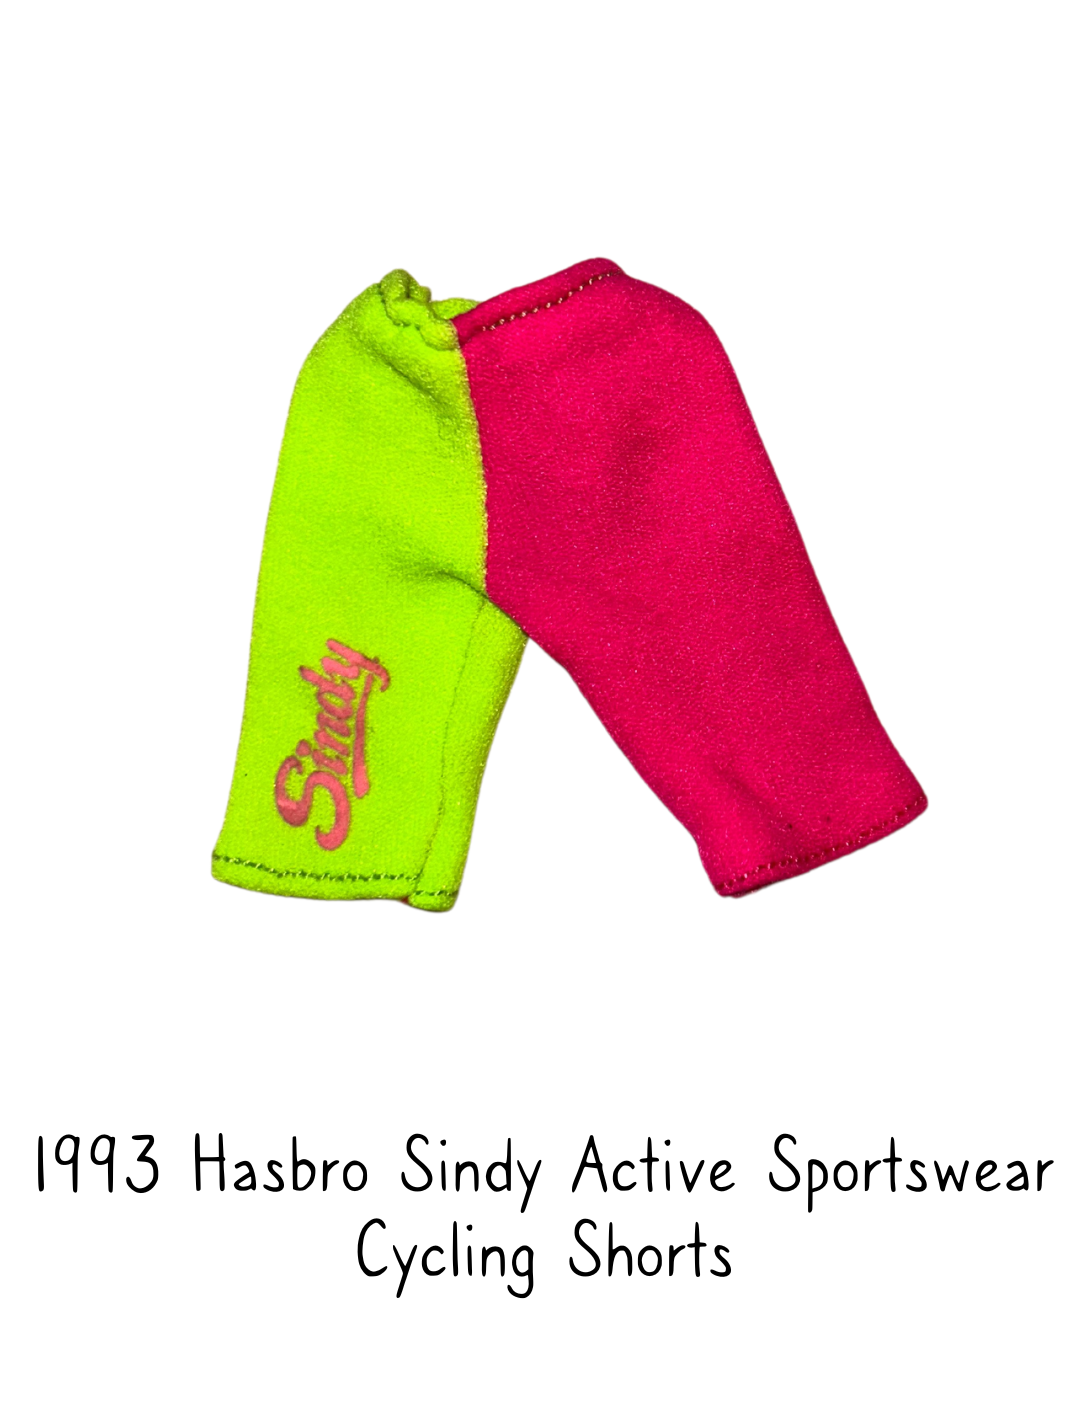 Hasbro Sindy 1993 Active Sportswear Cycling Shorts